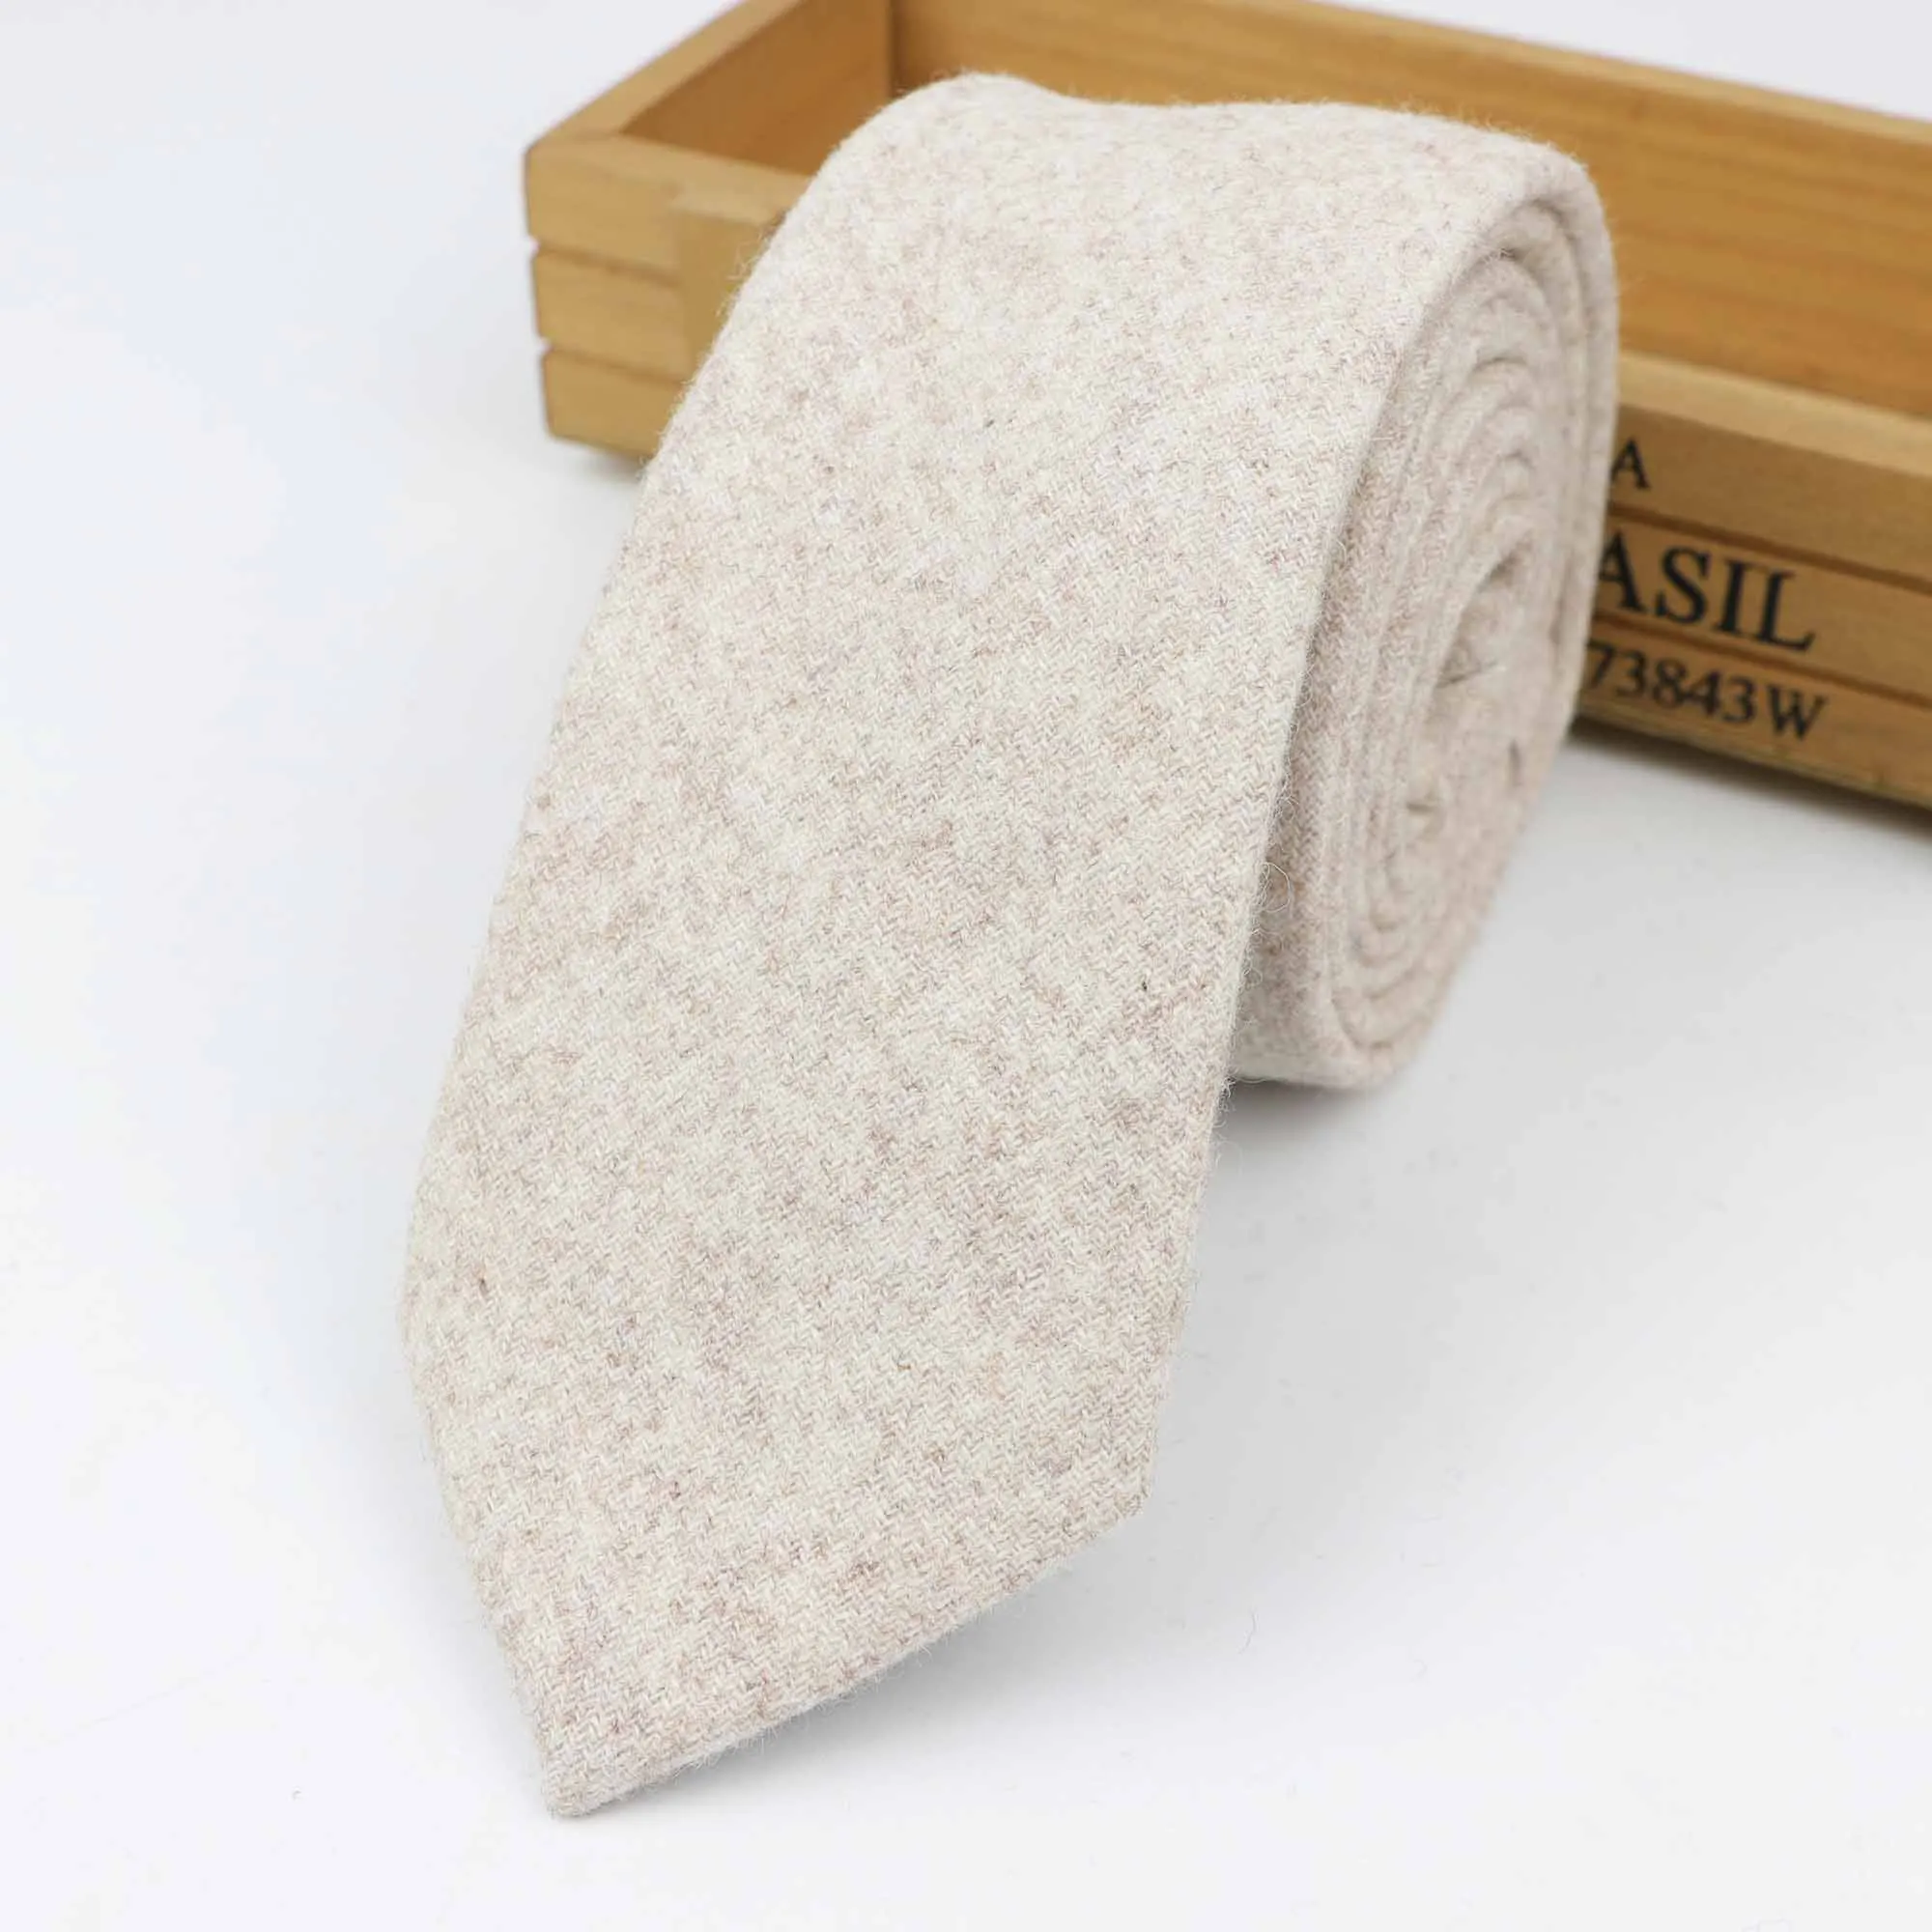 
New Style Wool Viscose Tie 7cm Ties Fluffy Solid Color Corbata Slim Striped Necktie Cravat Clothing Accessories Warm Dot Ties 